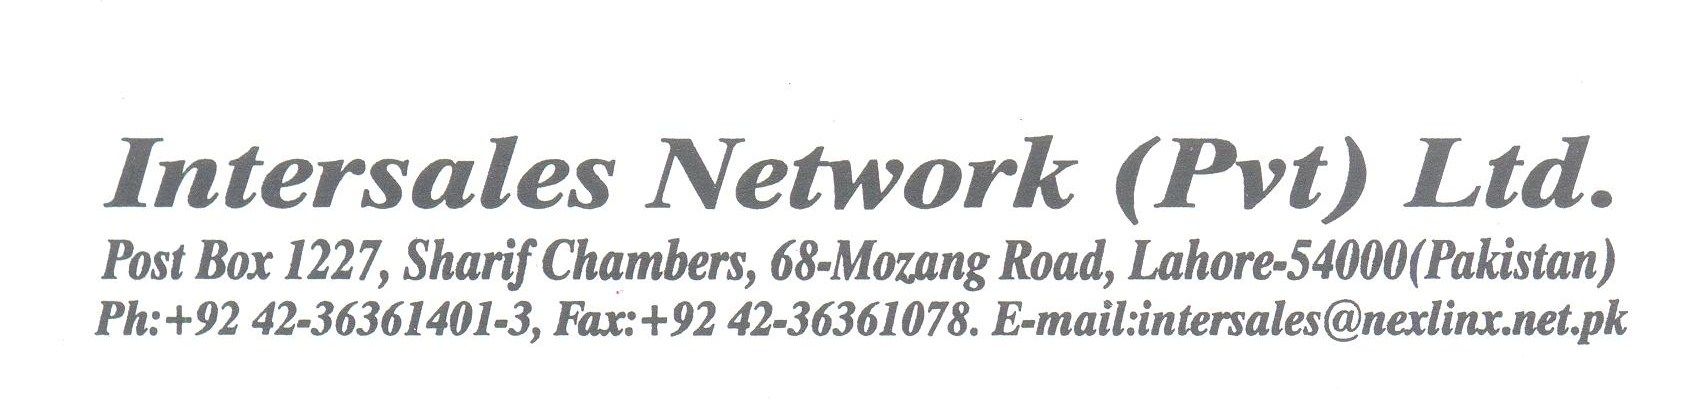 INTERSALES NETWORK (PVT) LTD logo